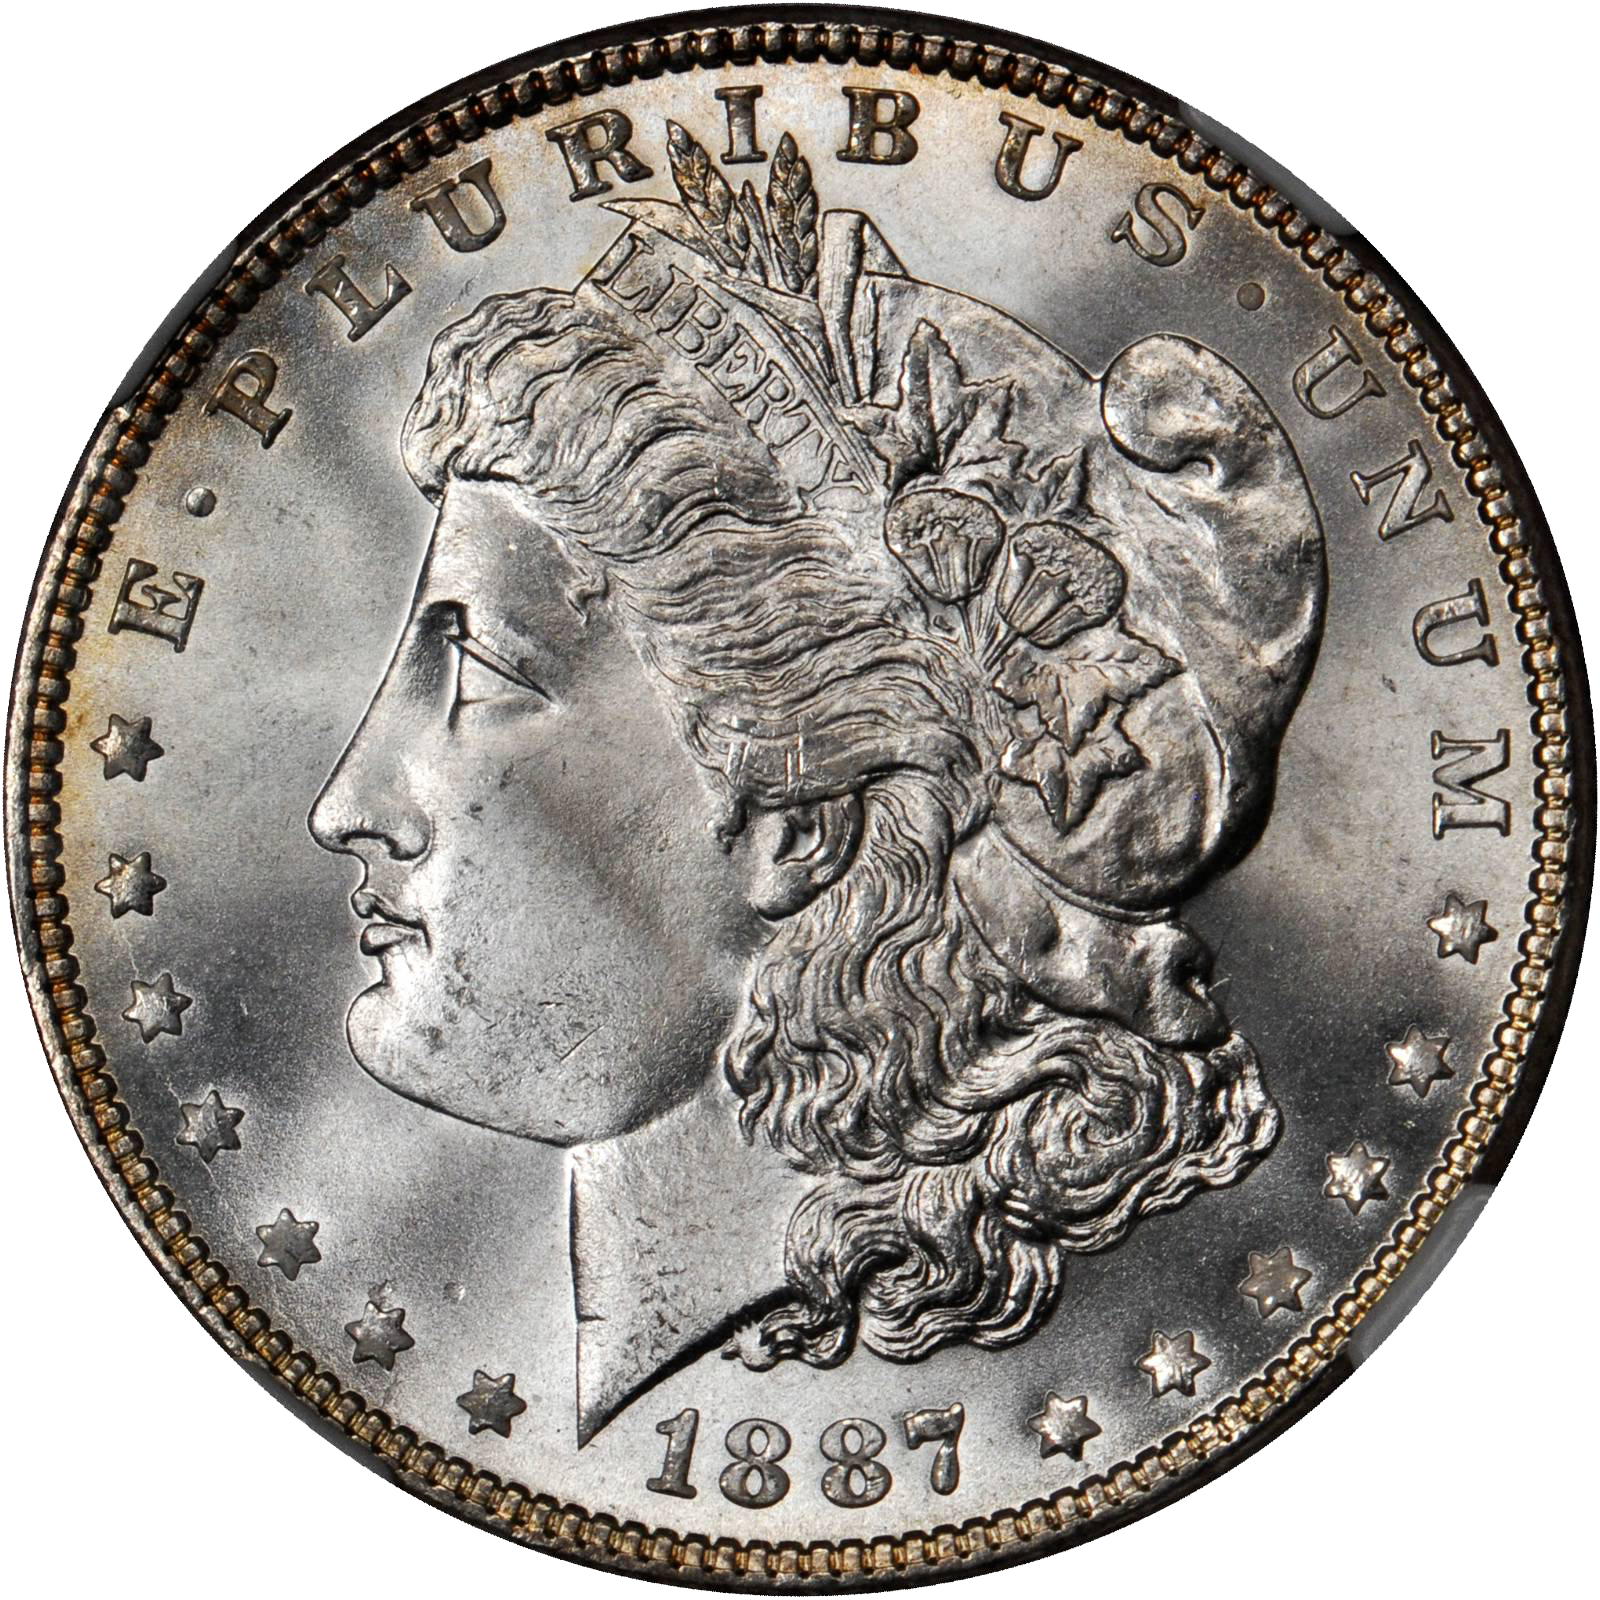 value of a silver dollar coin